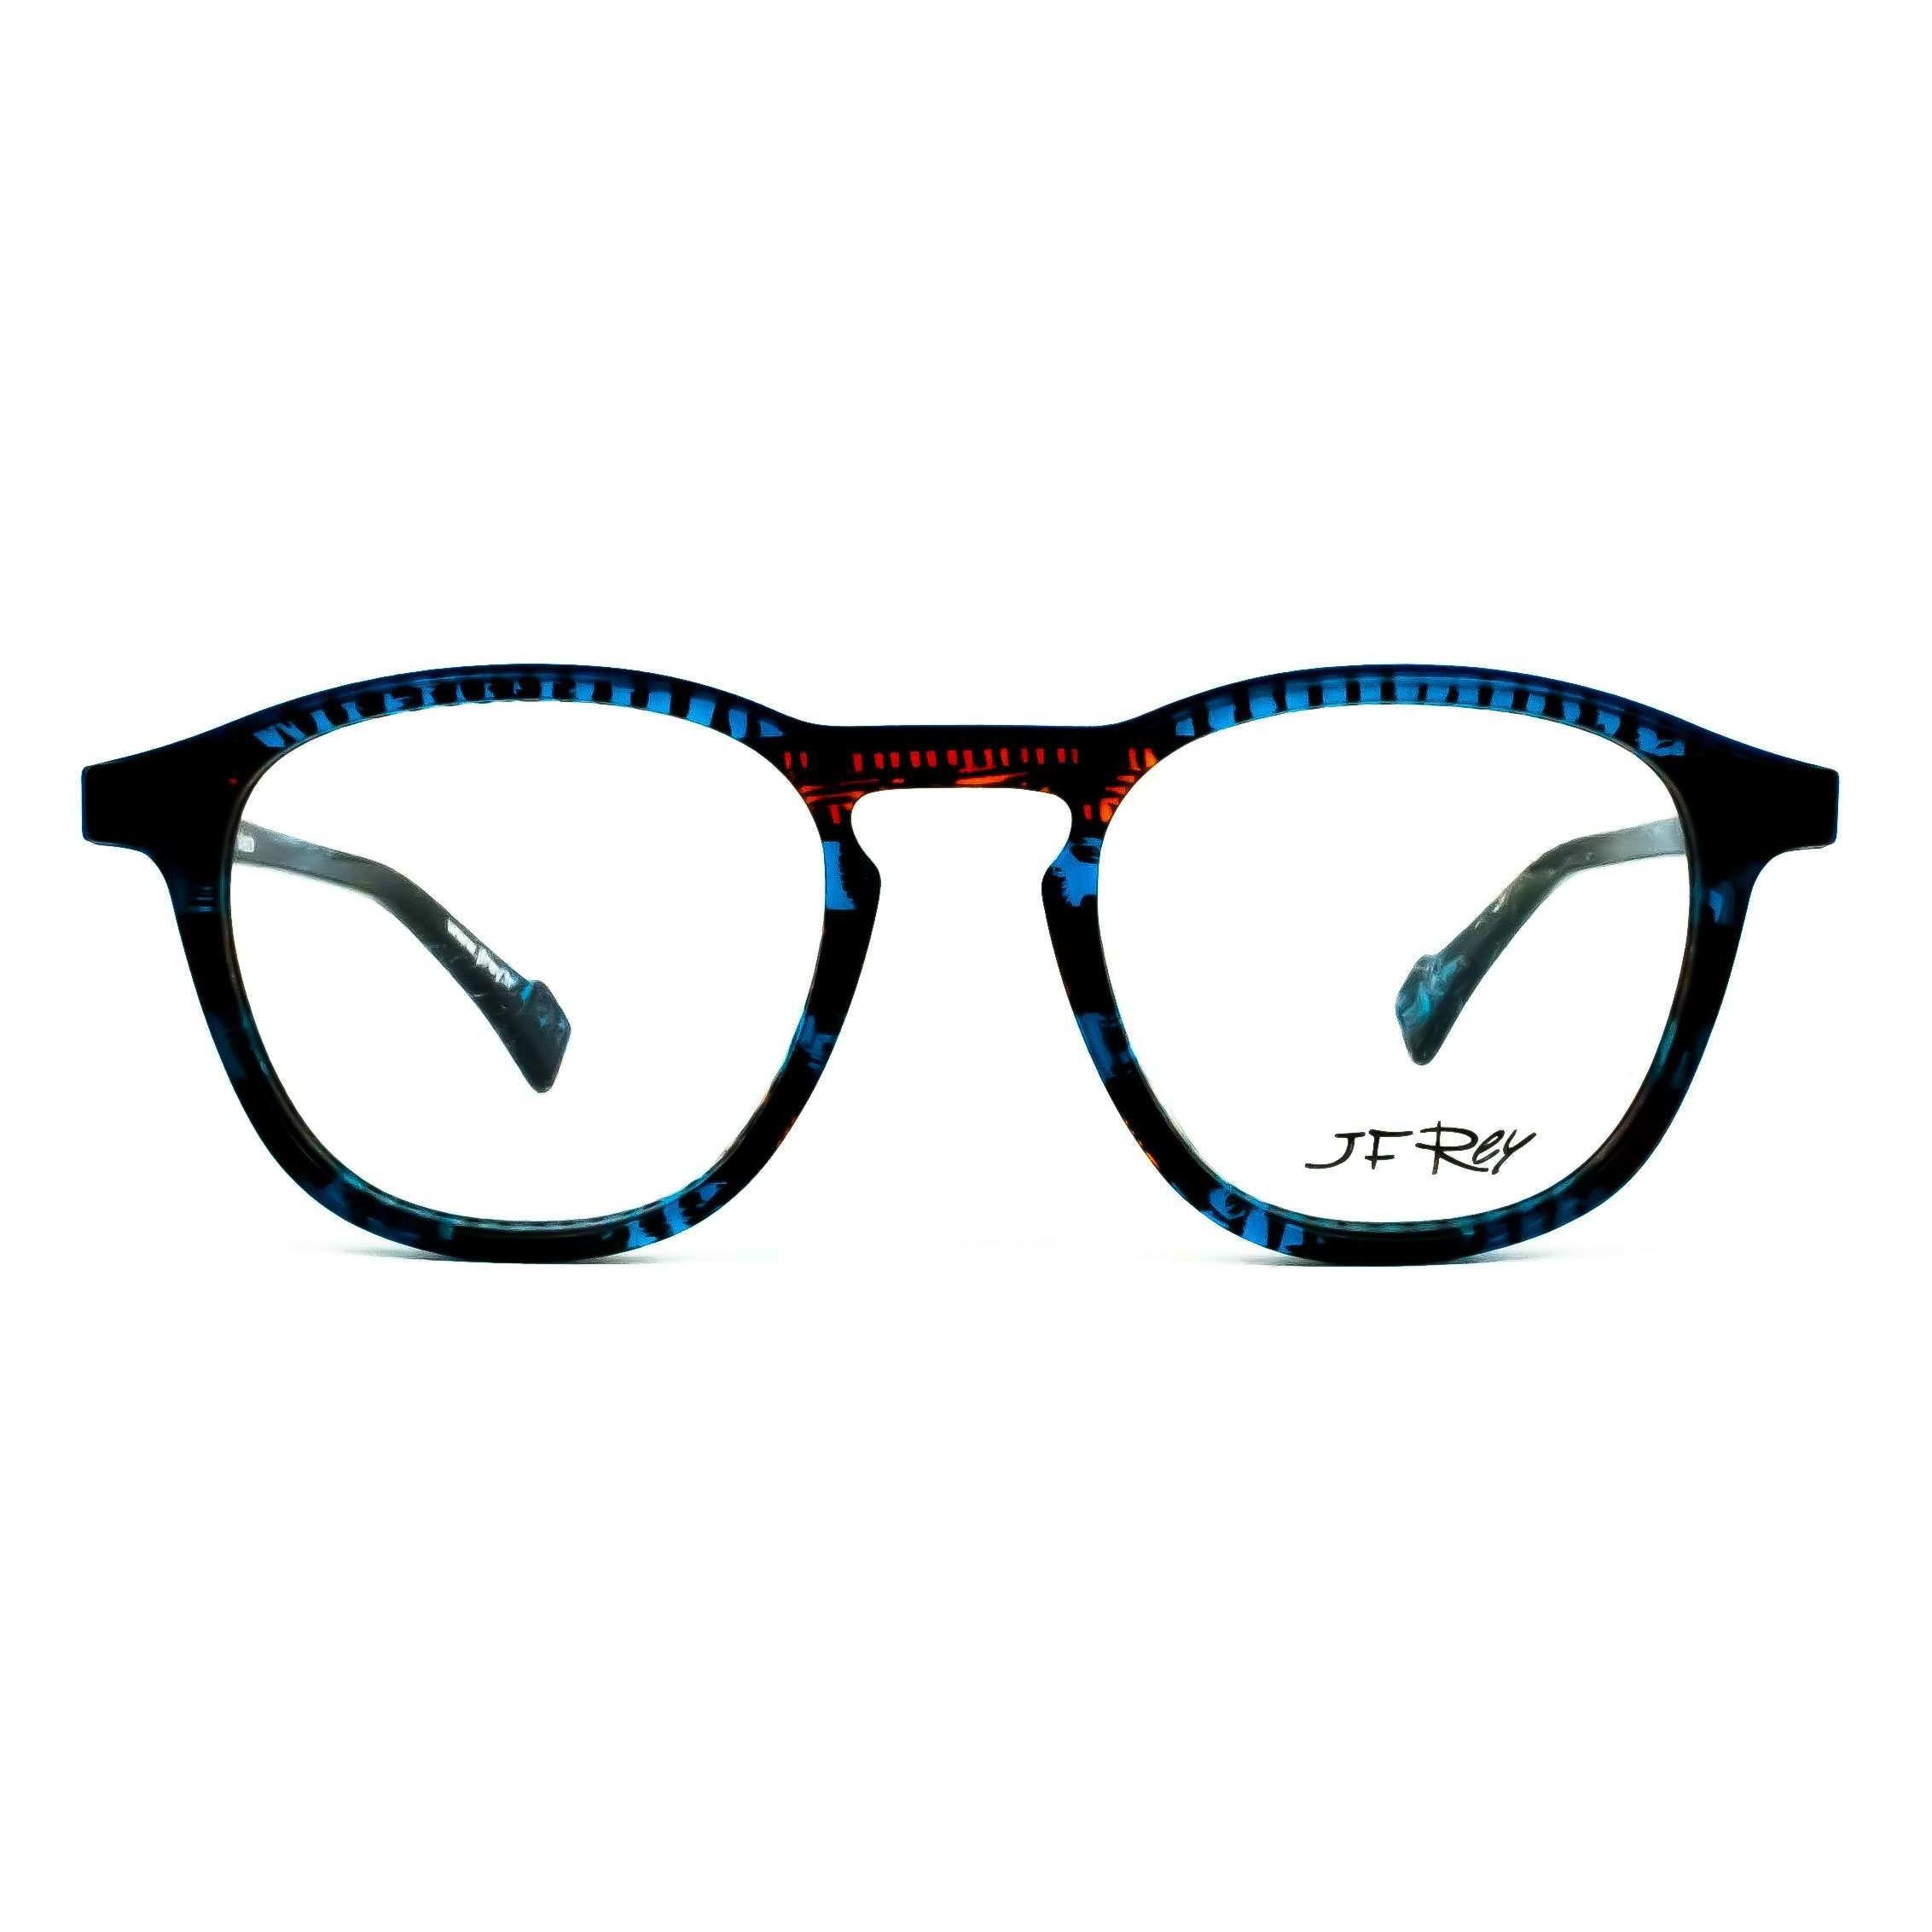 JF Rey Model 1398 Black-Blue Round Glasses